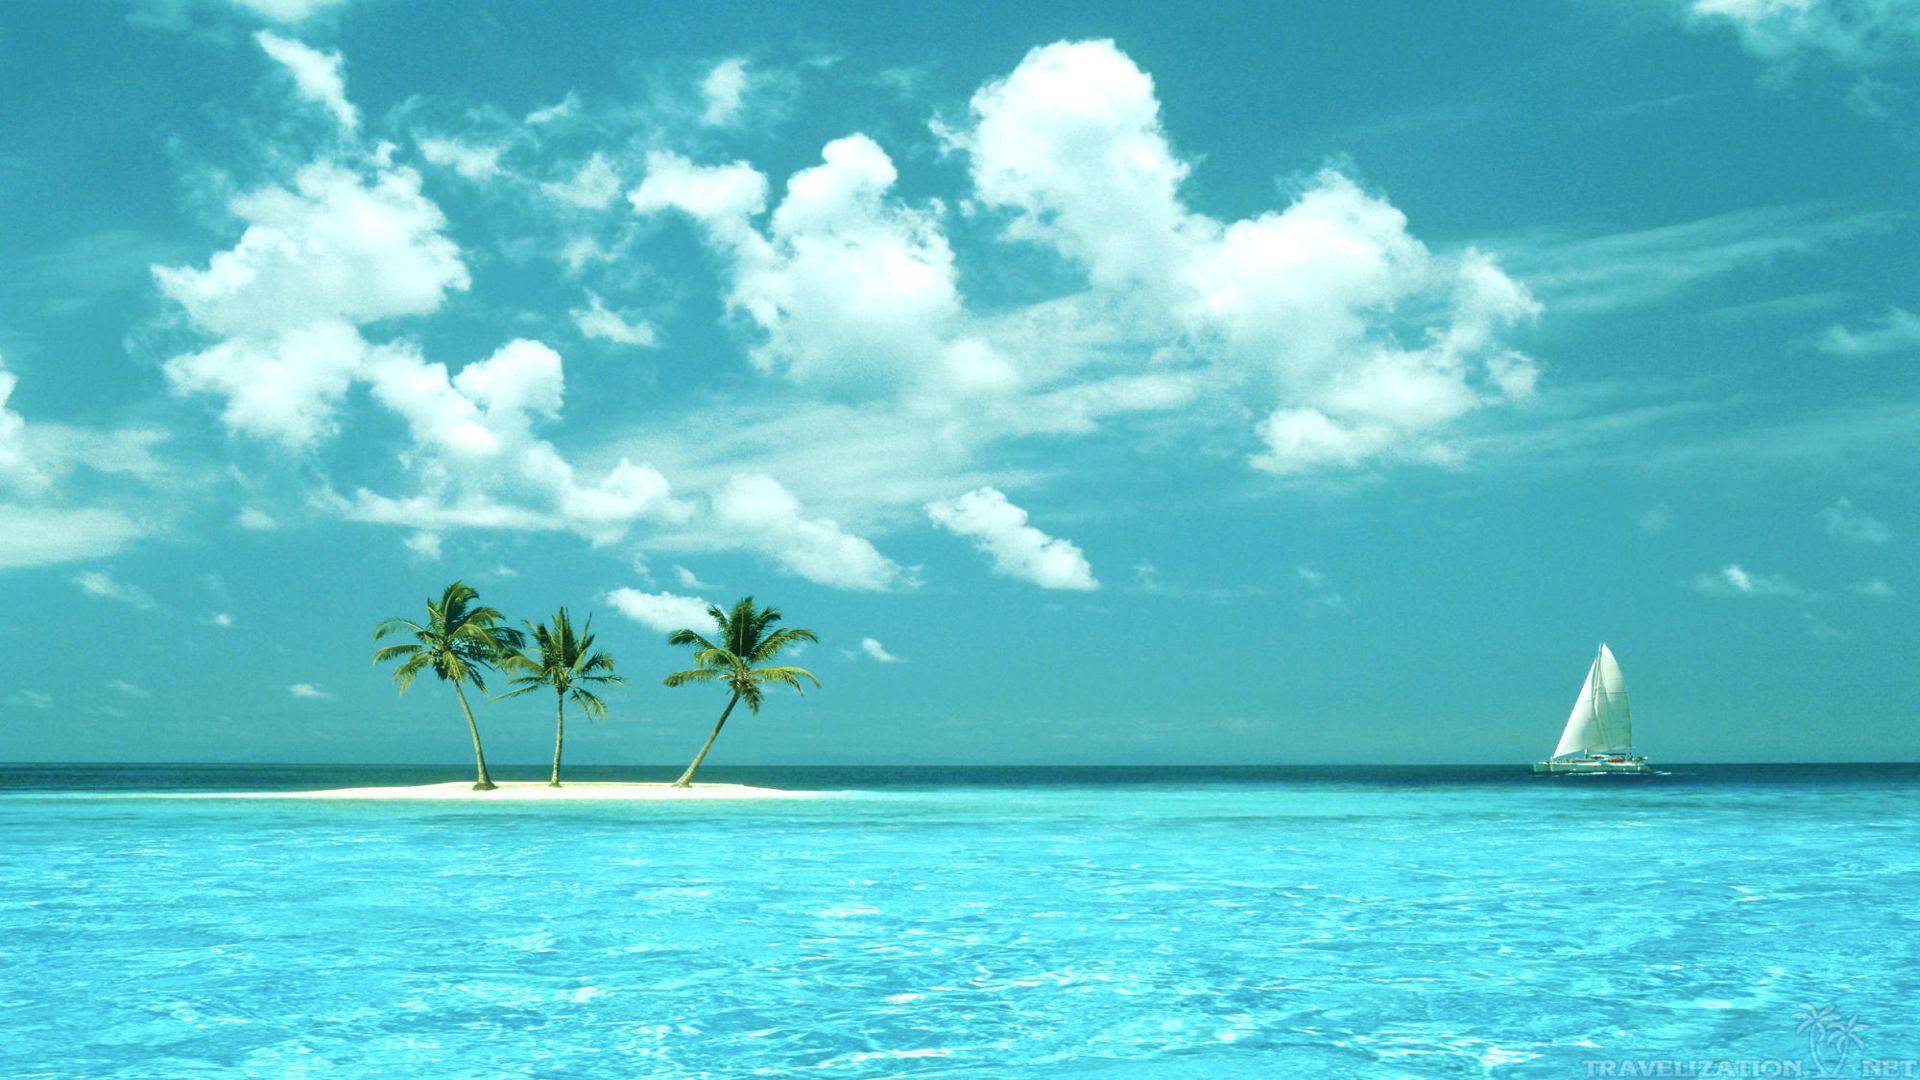 Tropical Island Paradise Wallpaper - WallpaperSafari